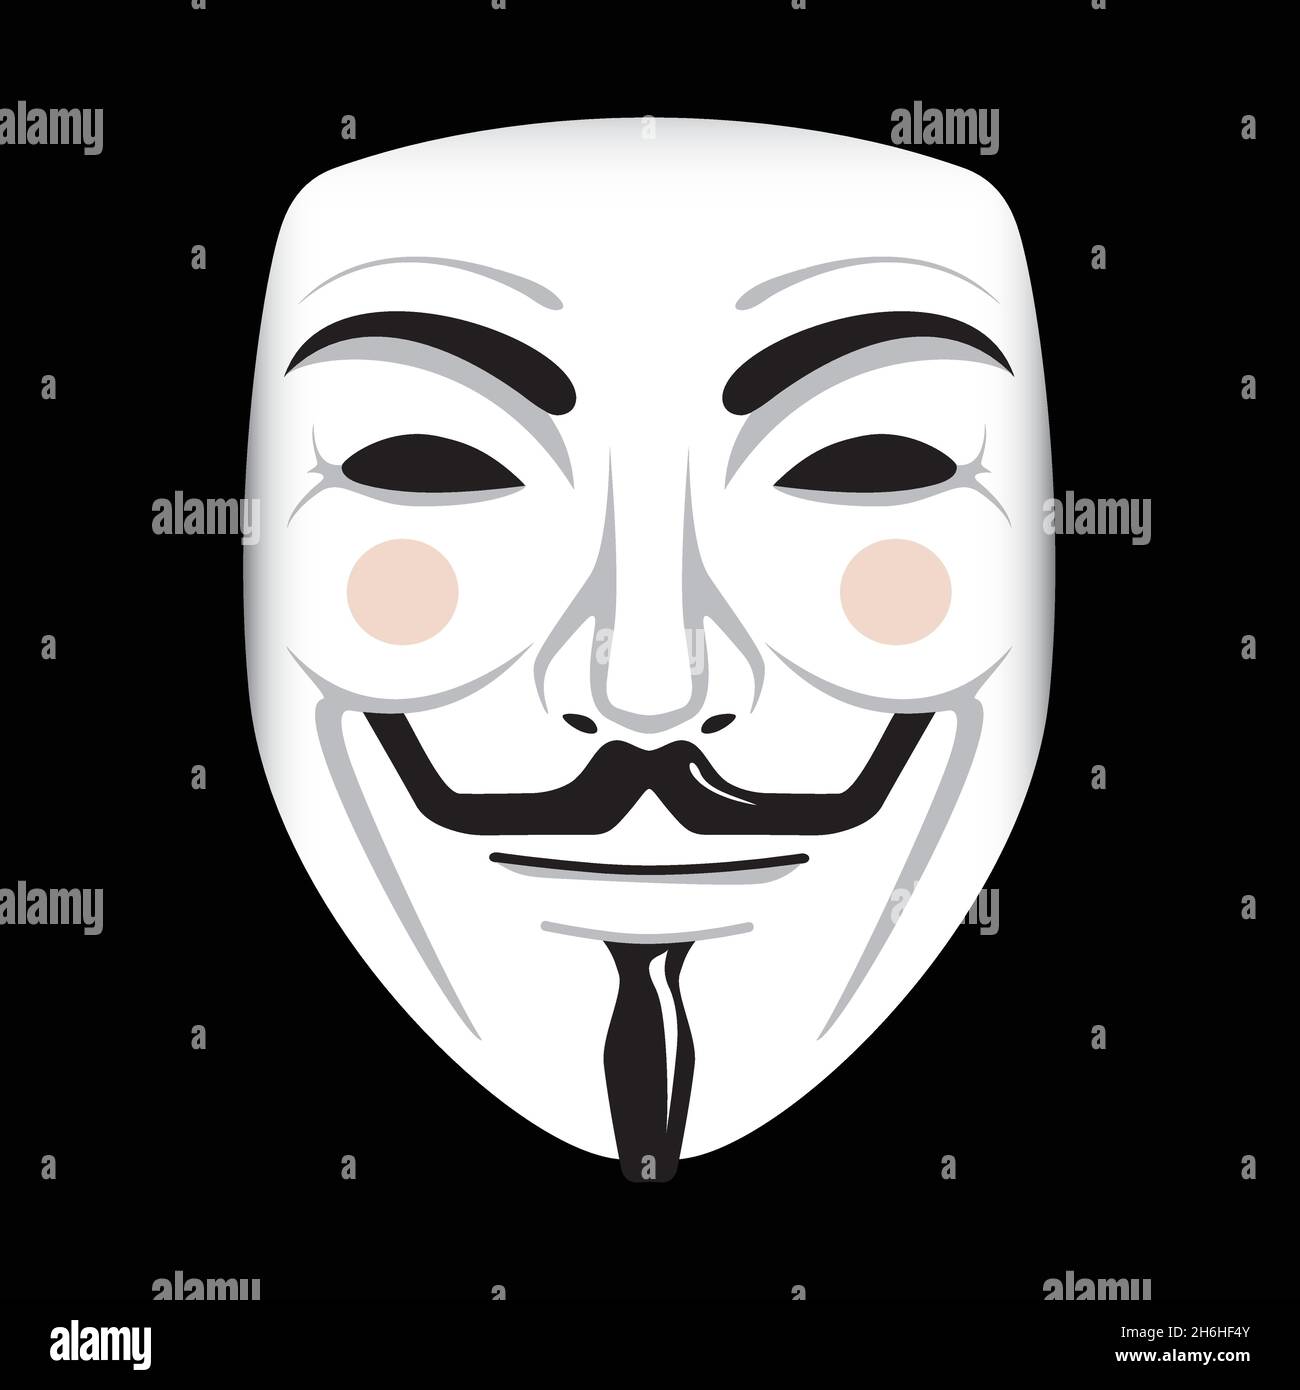 Anonymous movement Imágenes vectoriales de stock - Alamy